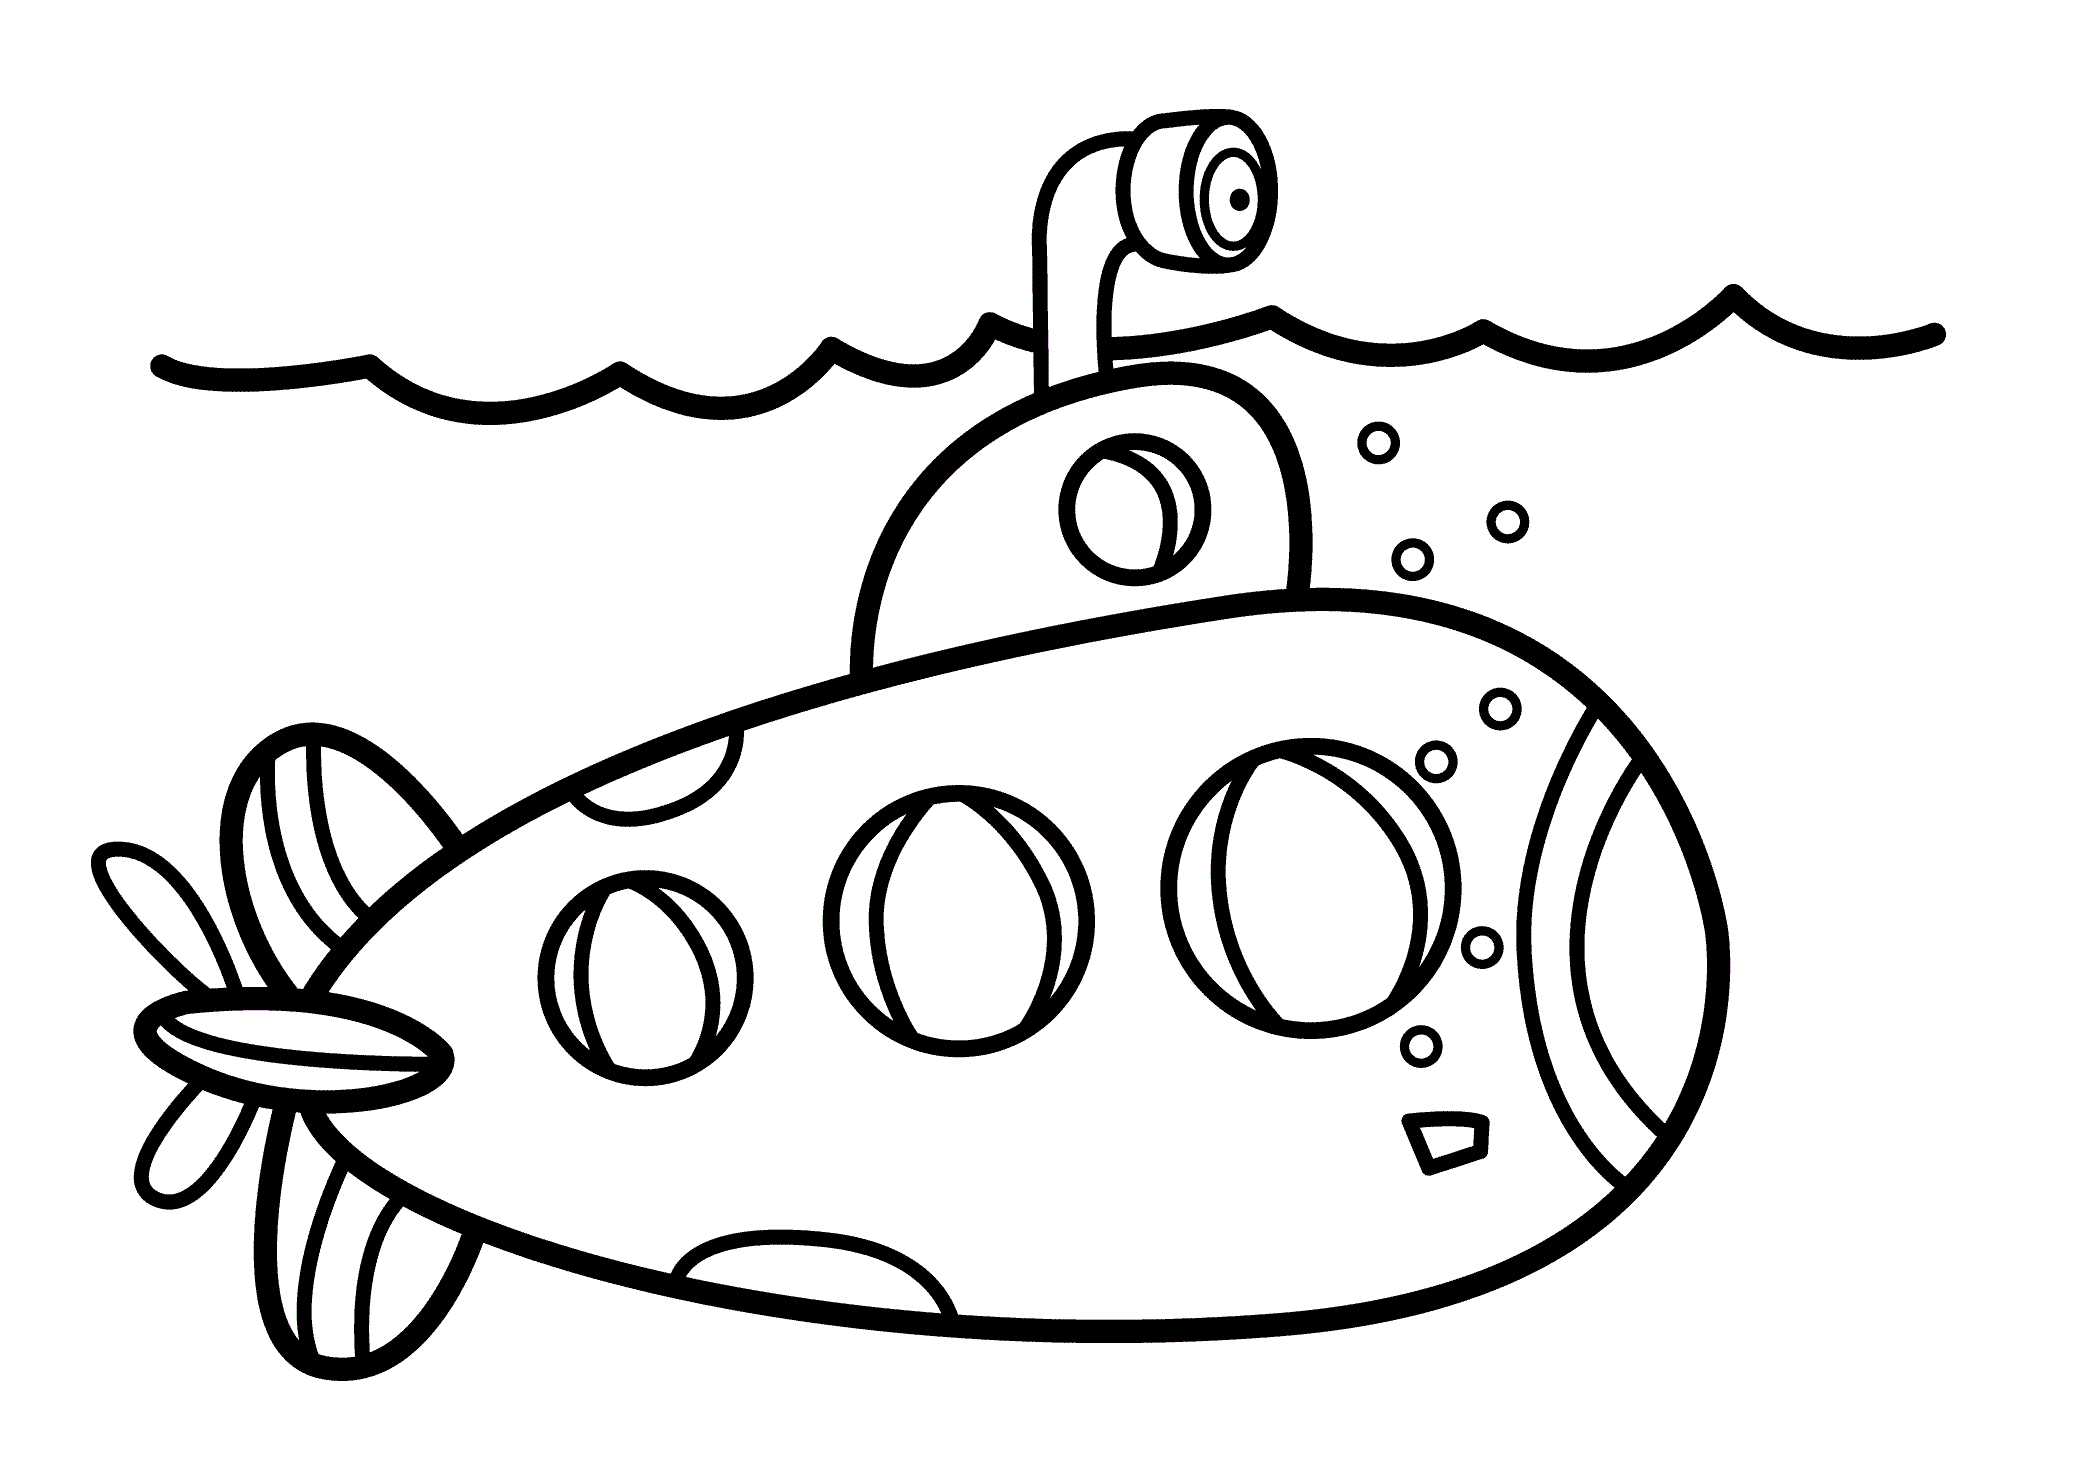 Submarine drawing free.